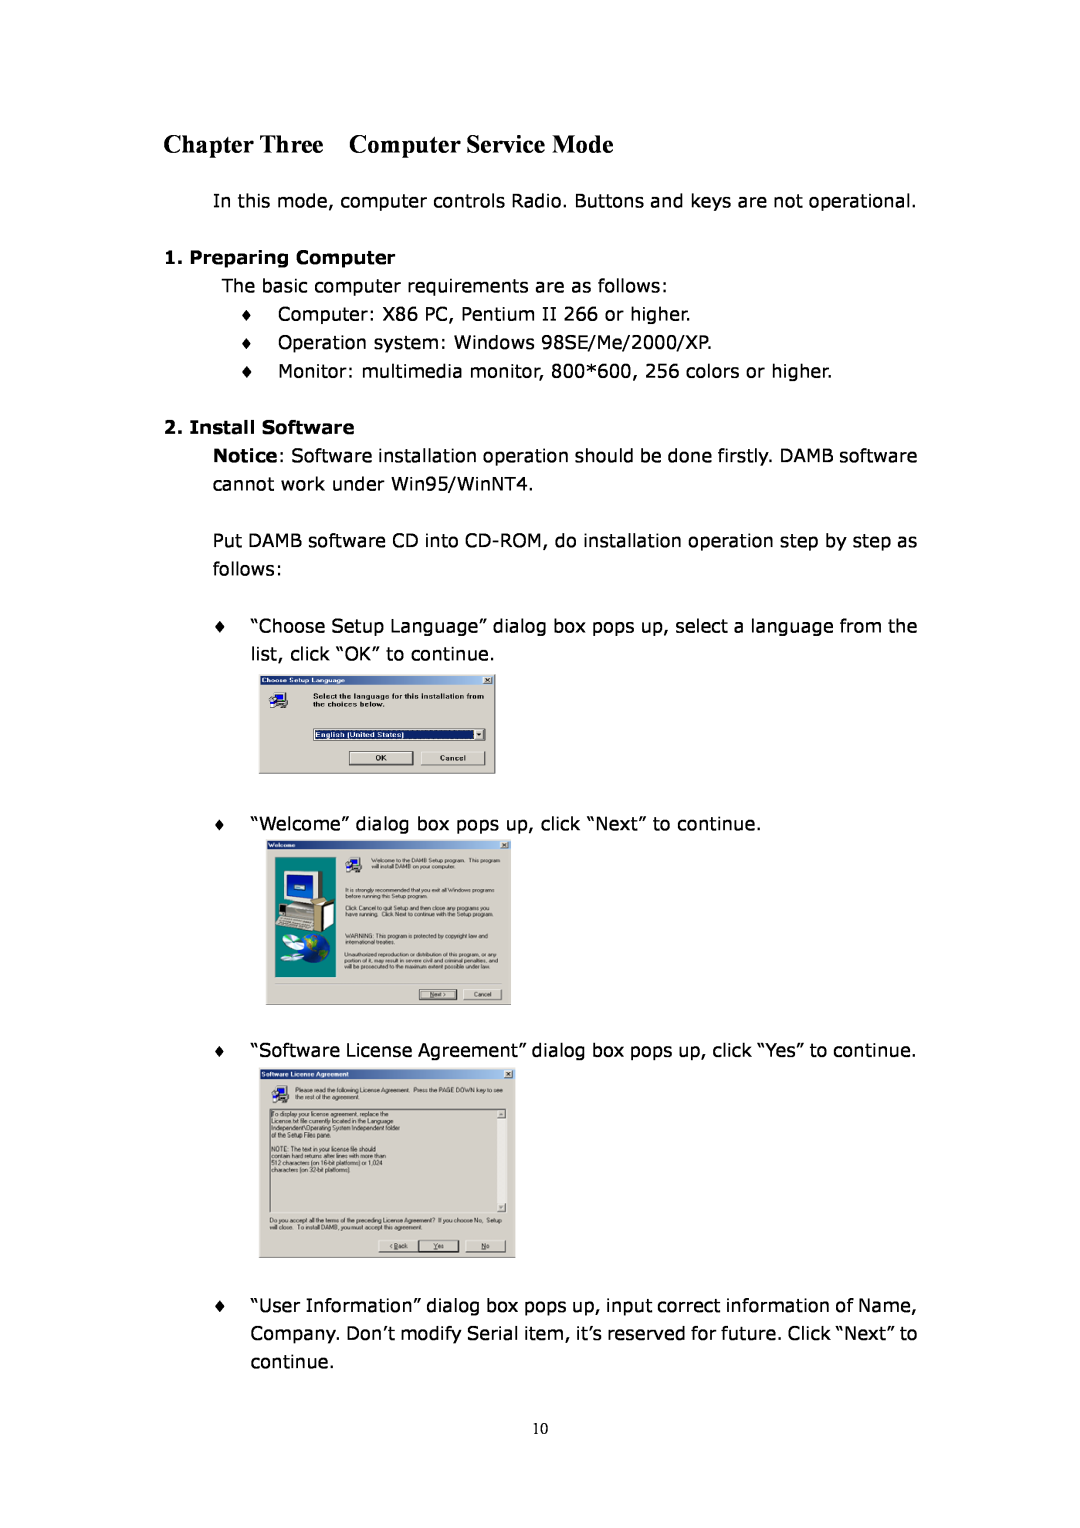 WorldSpace TONGSHI user manual Chapter Three Computer Service Mode, Preparing Computer, Install Software 